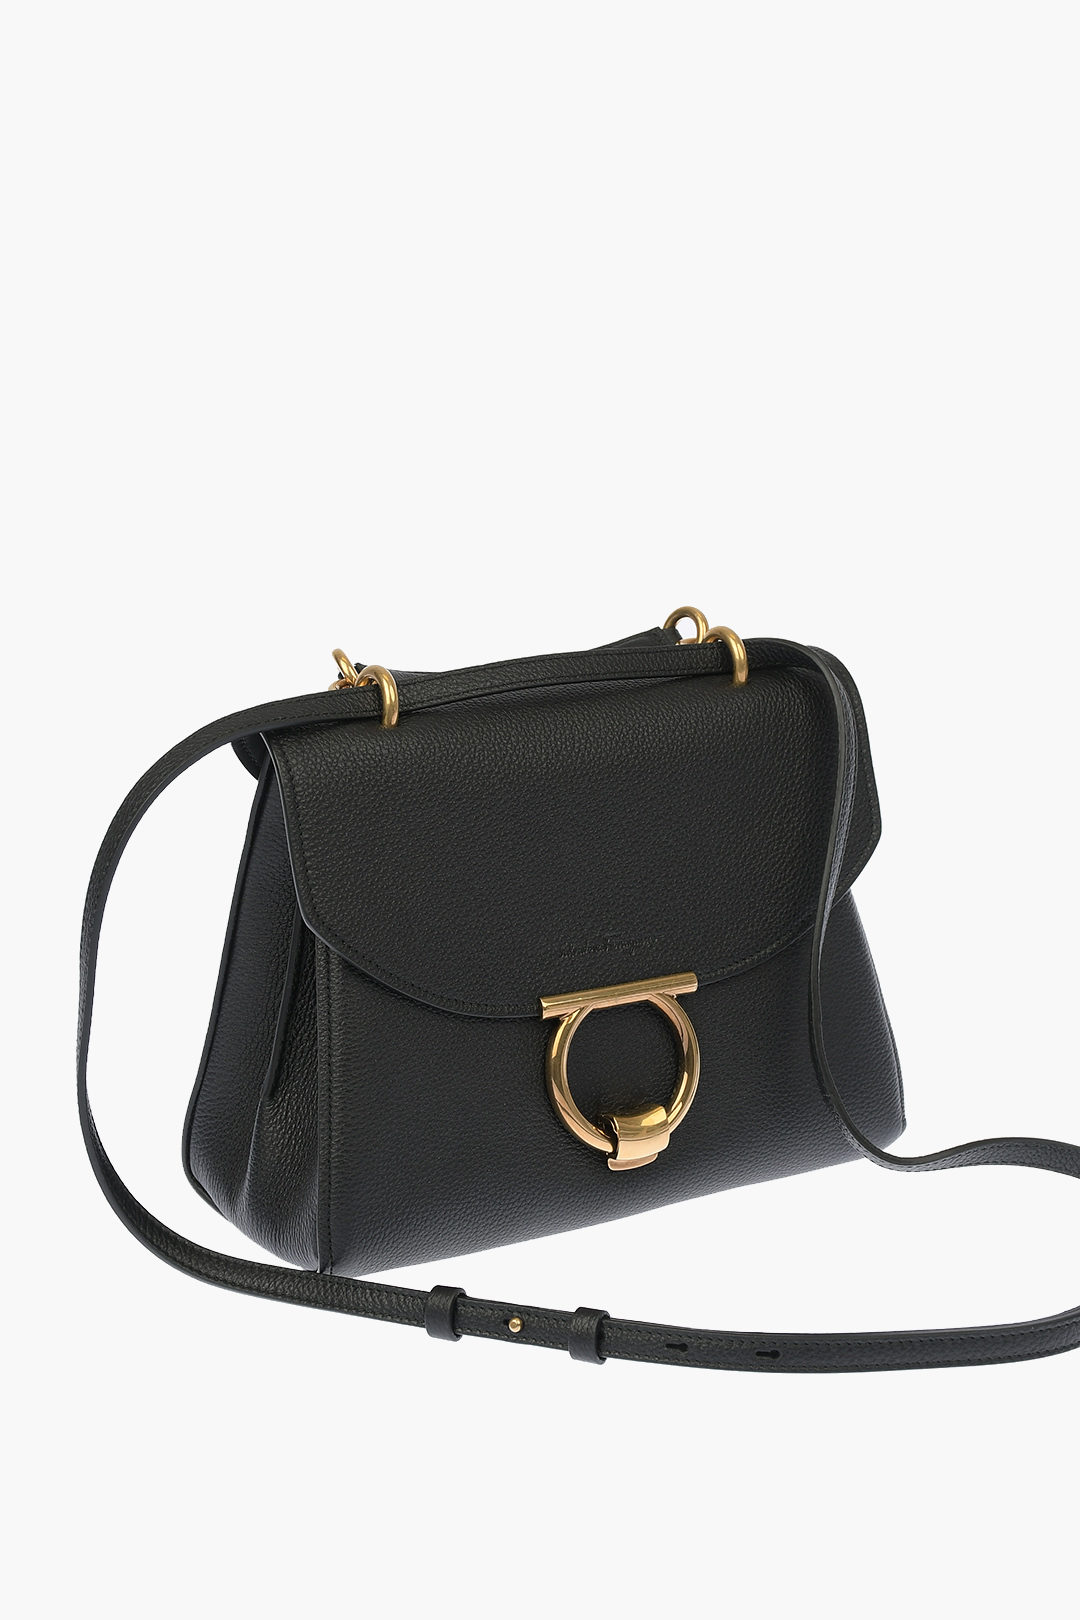 Ferragamo Margot Leather Handbag